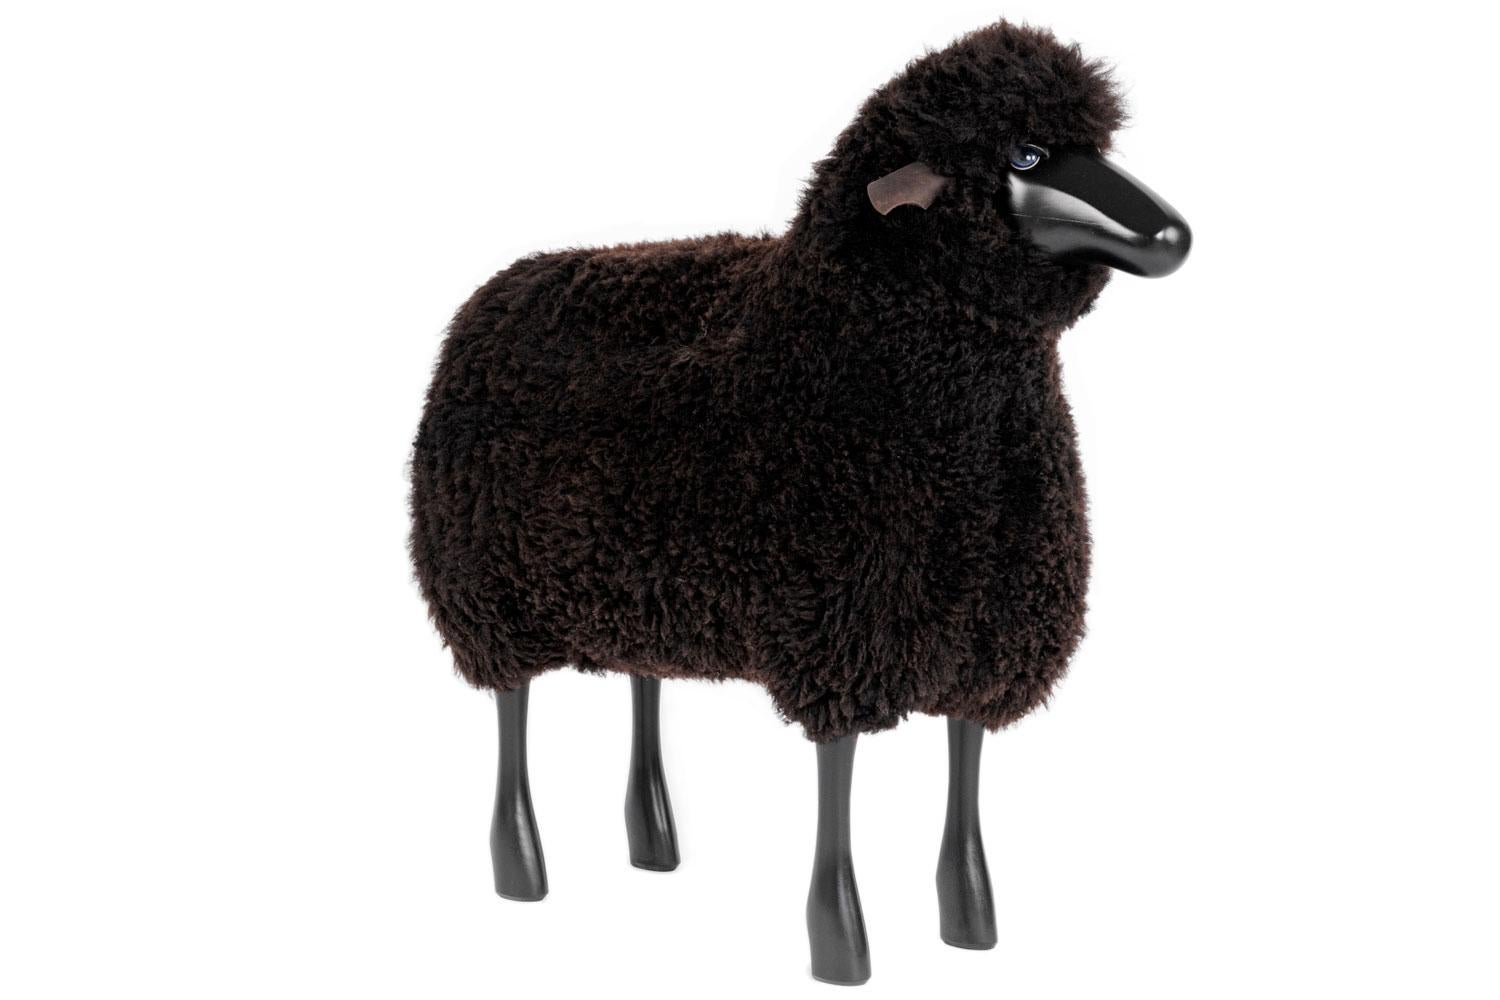 curly black sheep